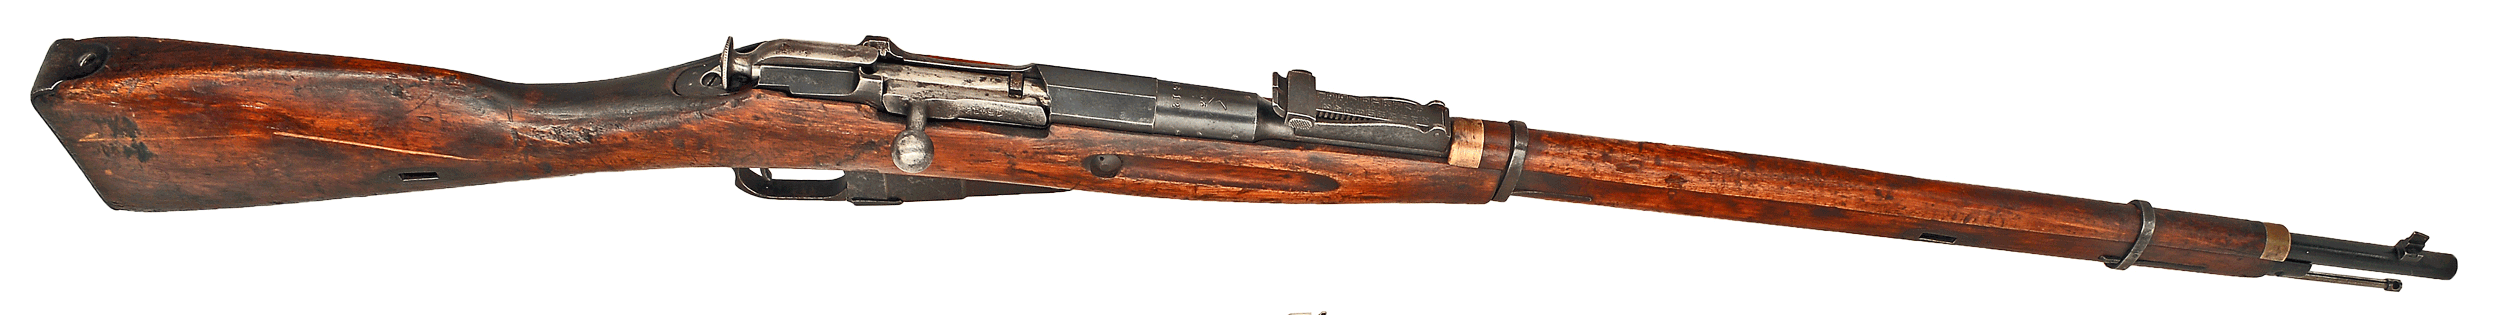 Mosin Nagant M91 30 Rifle #4